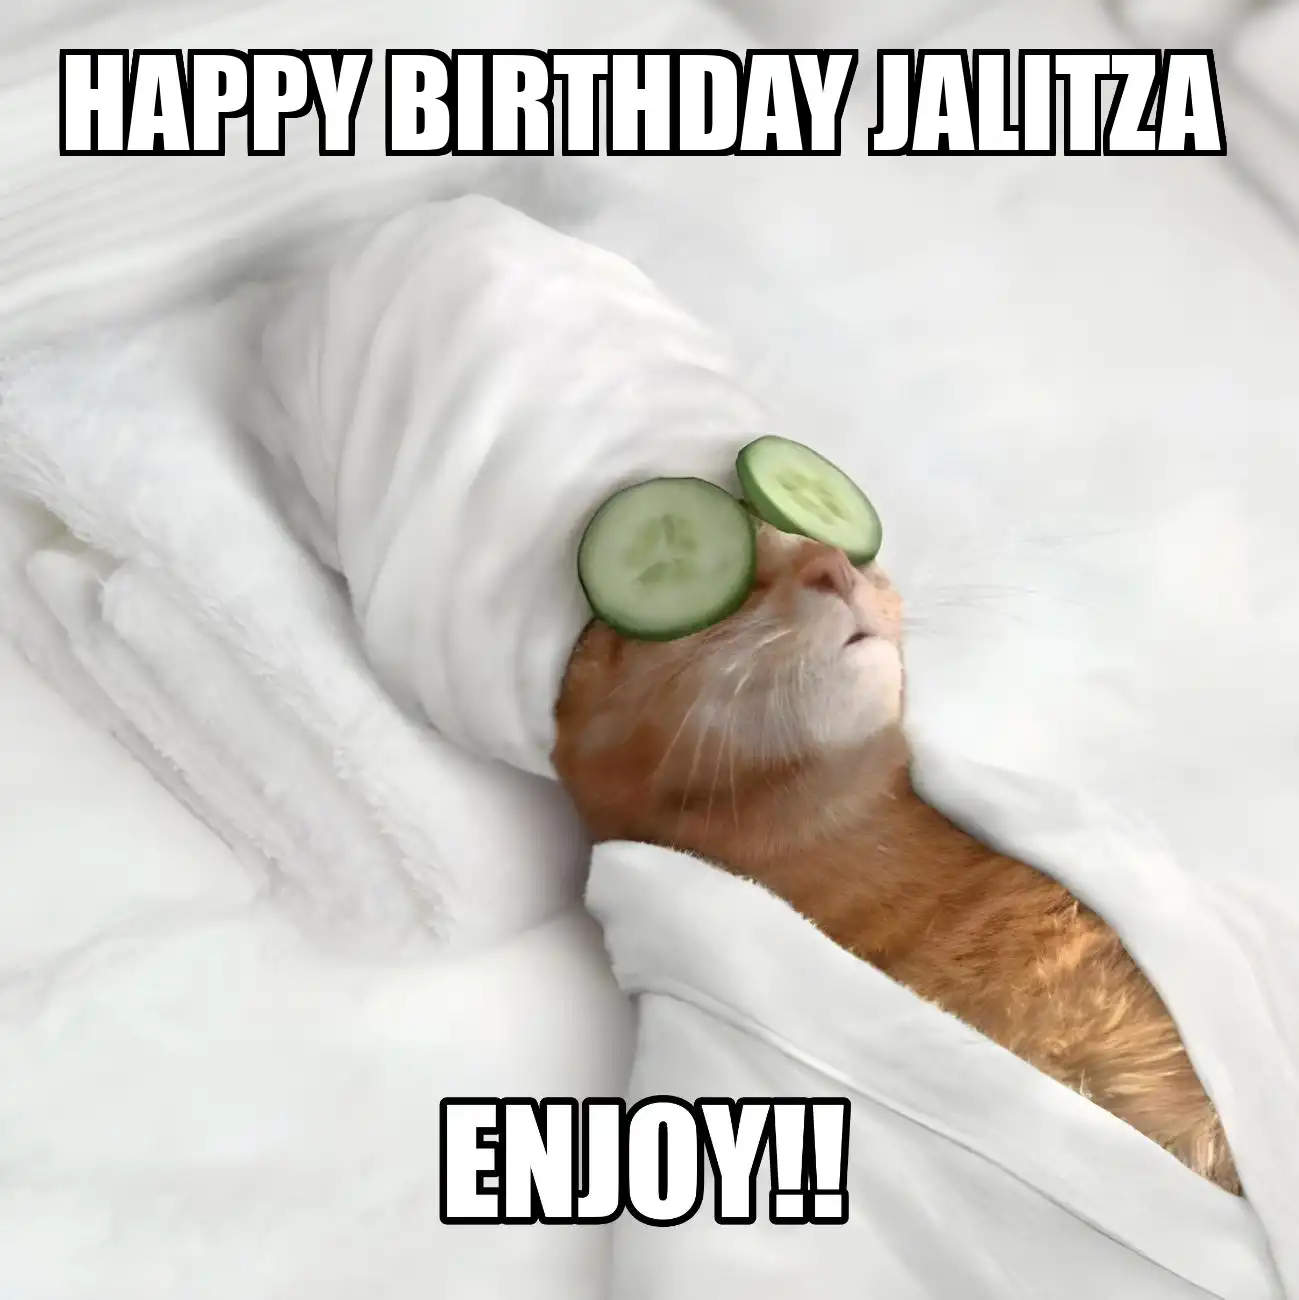 Happy Birthday Jalitza Enjoy Cat Meme